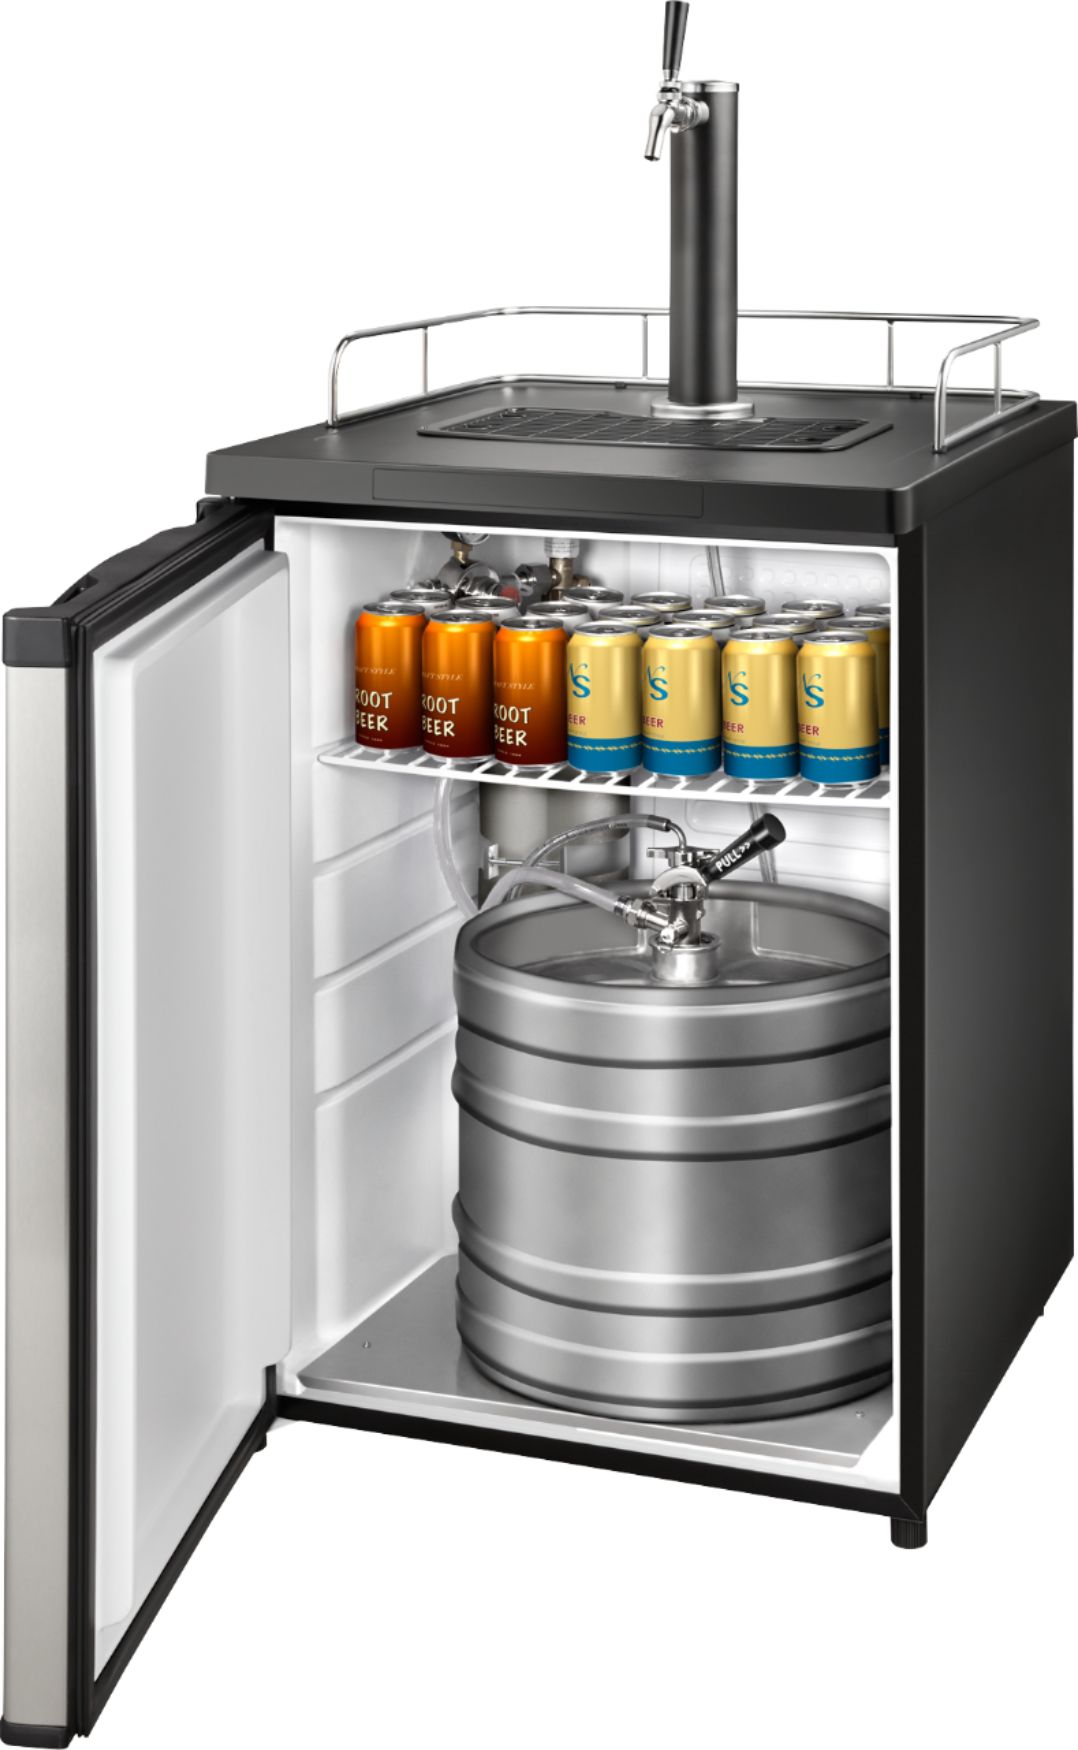 Stainless steel Ft Insignia- 5.6 Cu 1-Tap Beverage Cooler Kegerator 